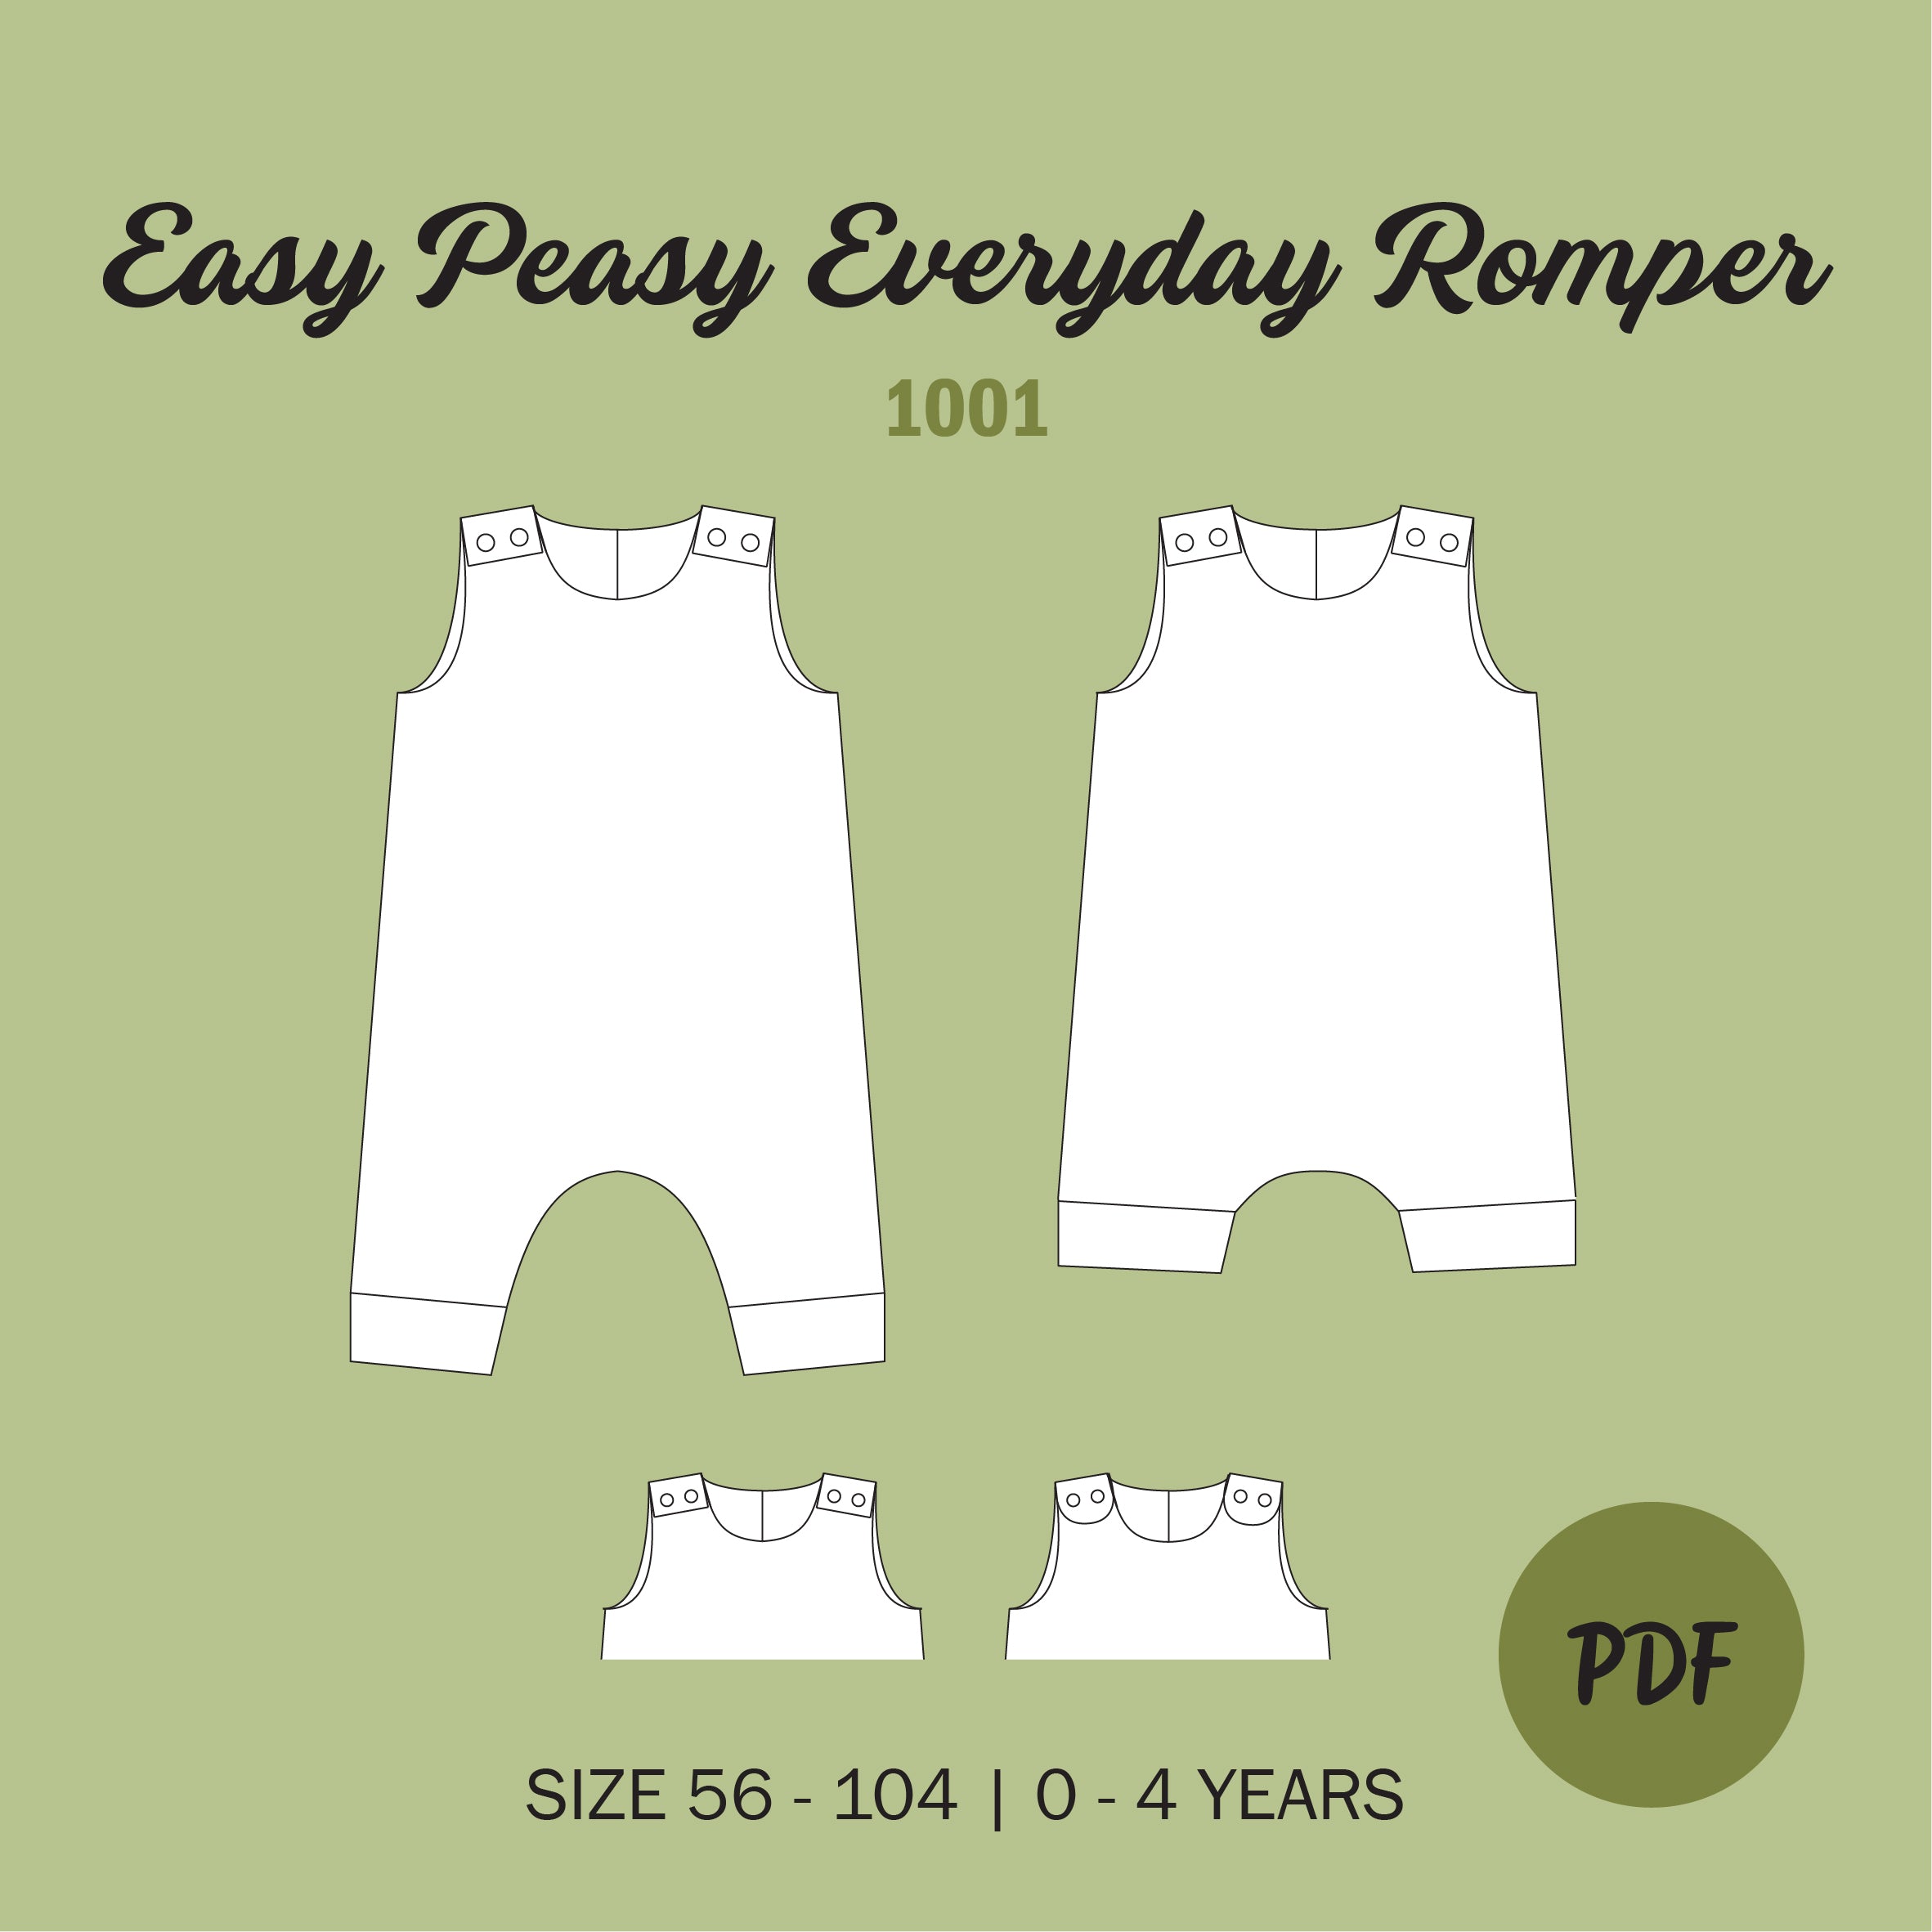 Easy Peasy Everyday Romper - Sewing Pattern PDF